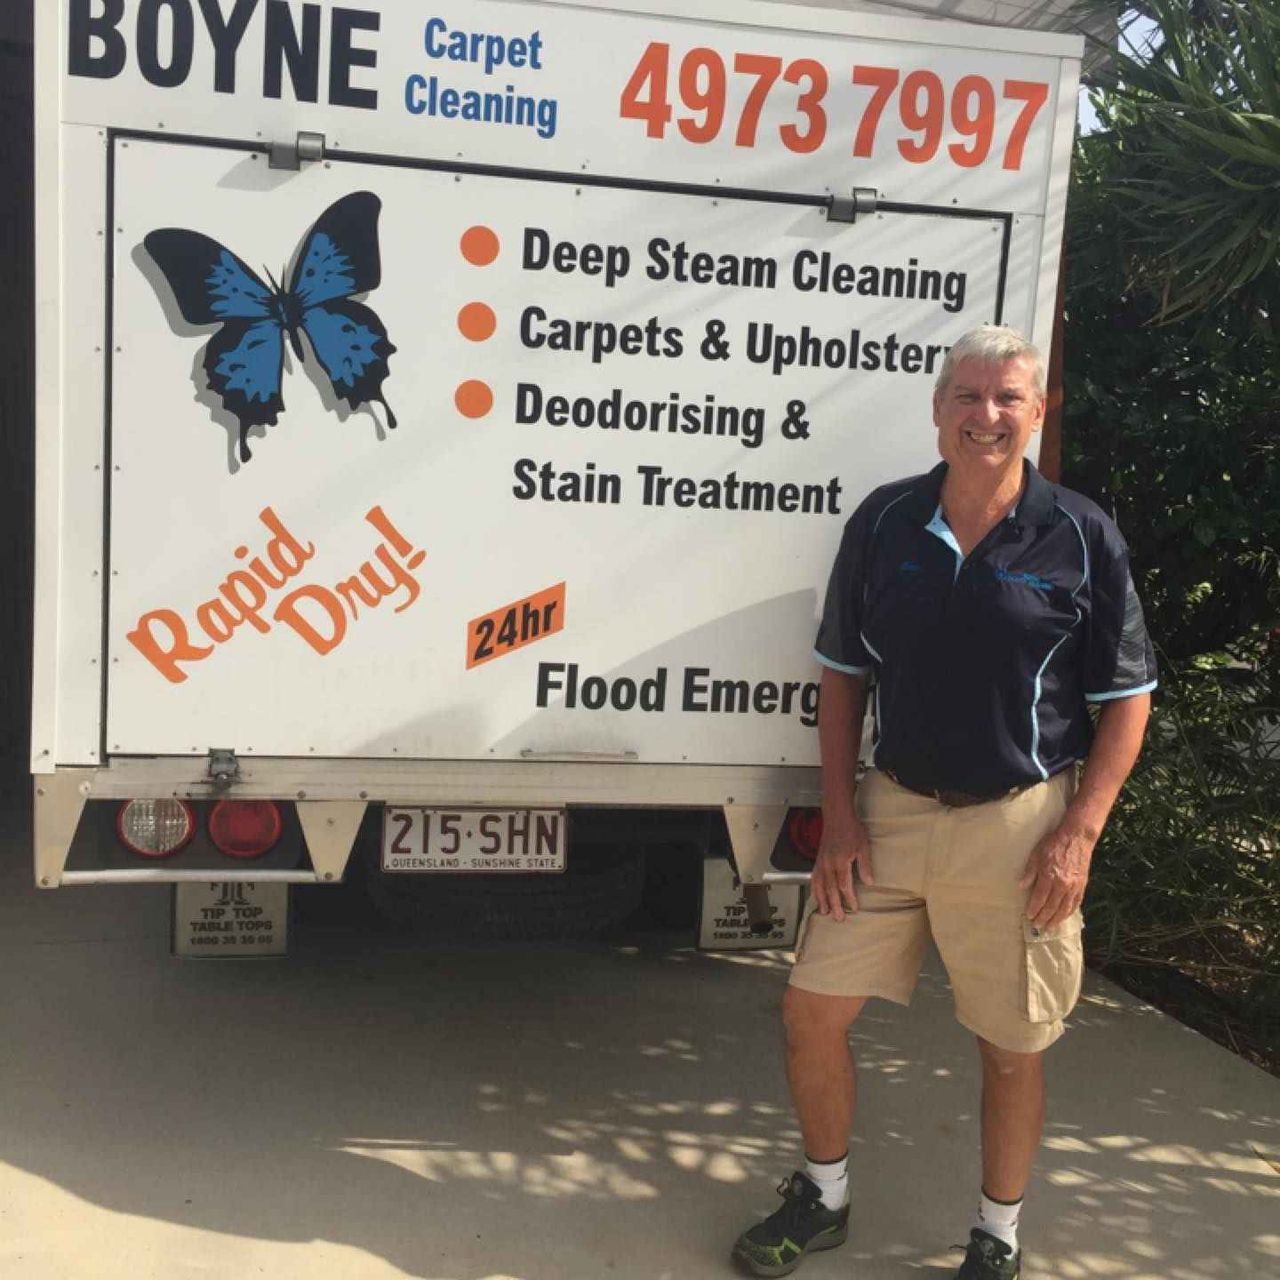 Boyne Carpet Cleaning image